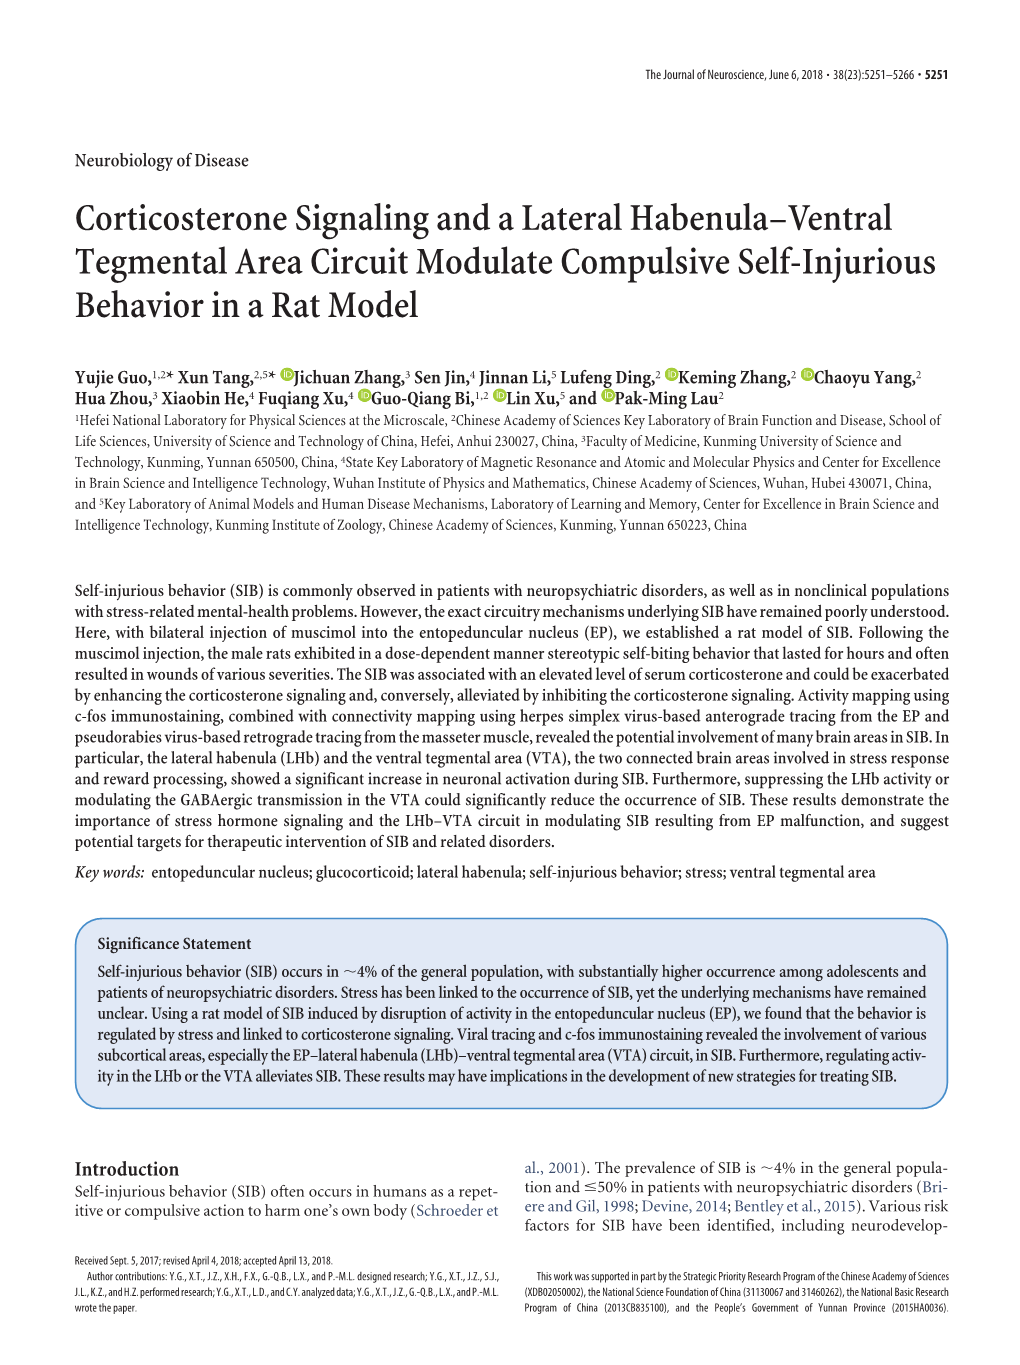 Corticosterone Signaling and a Lateral Habenula–Ventral Tegmental Area Circuit Modulate Compulsive Self-Injurious Behavior in a Rat Model